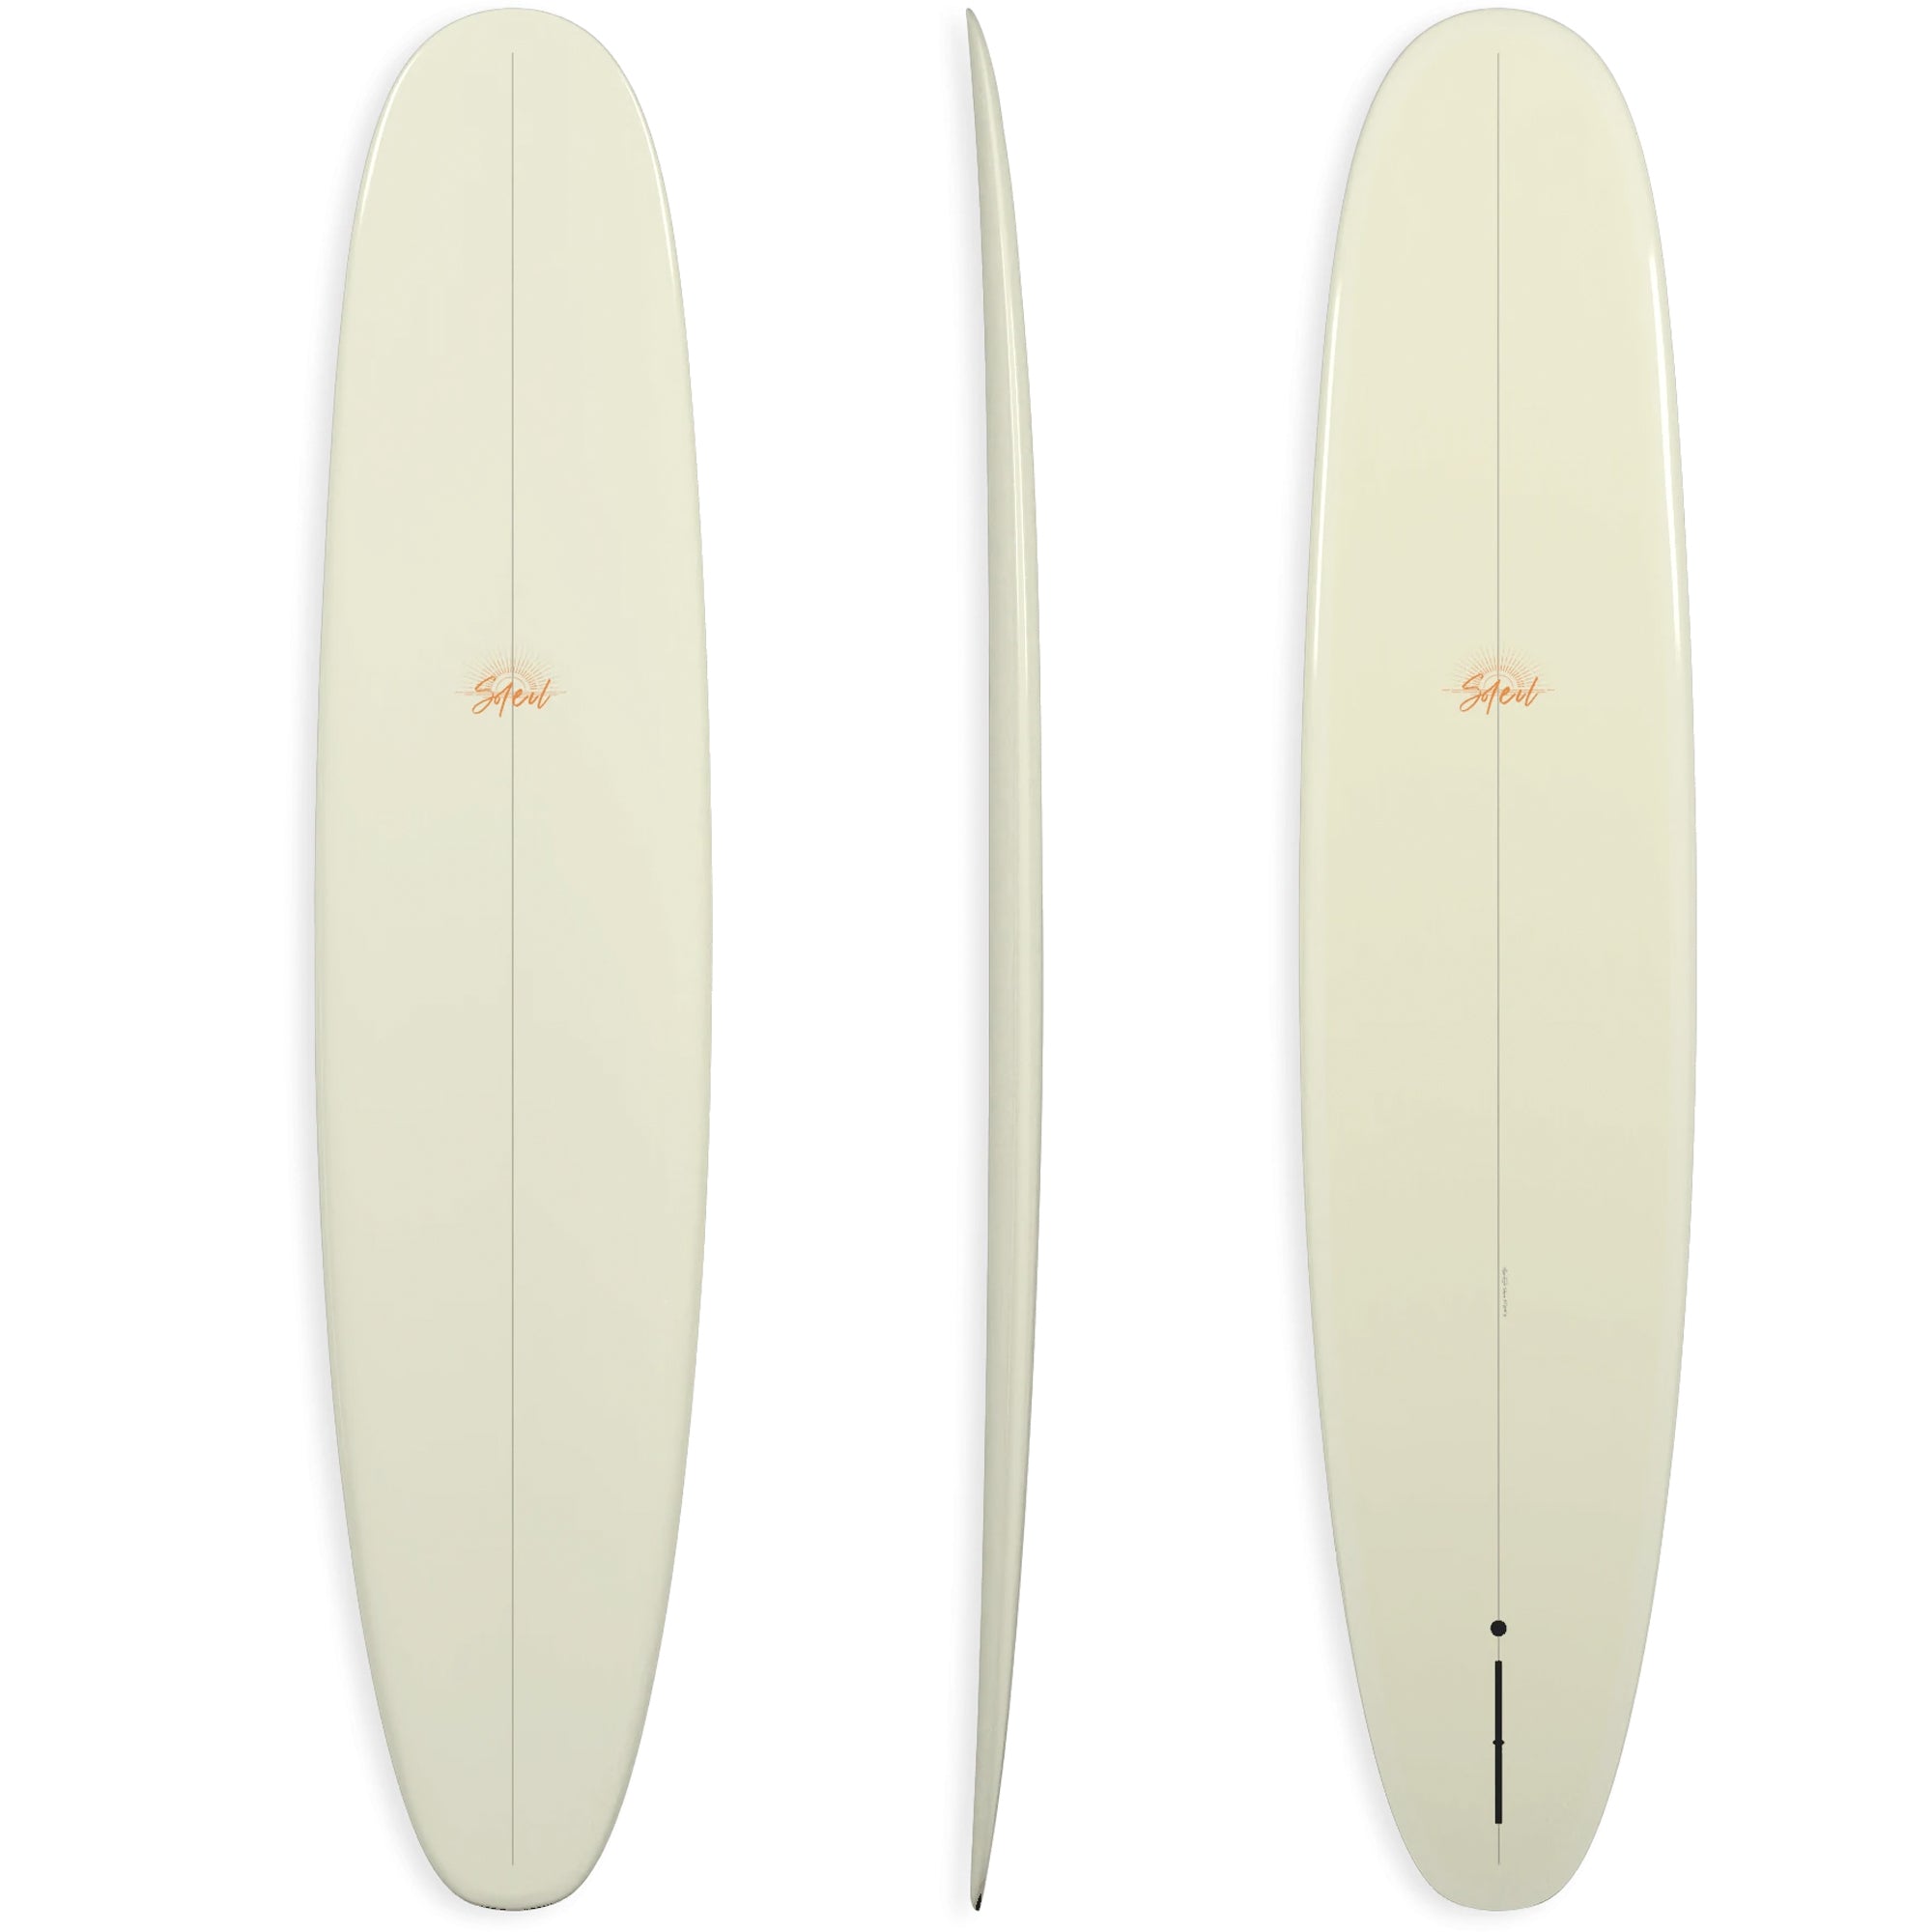 Soleil Sunkist Thunderbolt Silver Longboard Surfboard